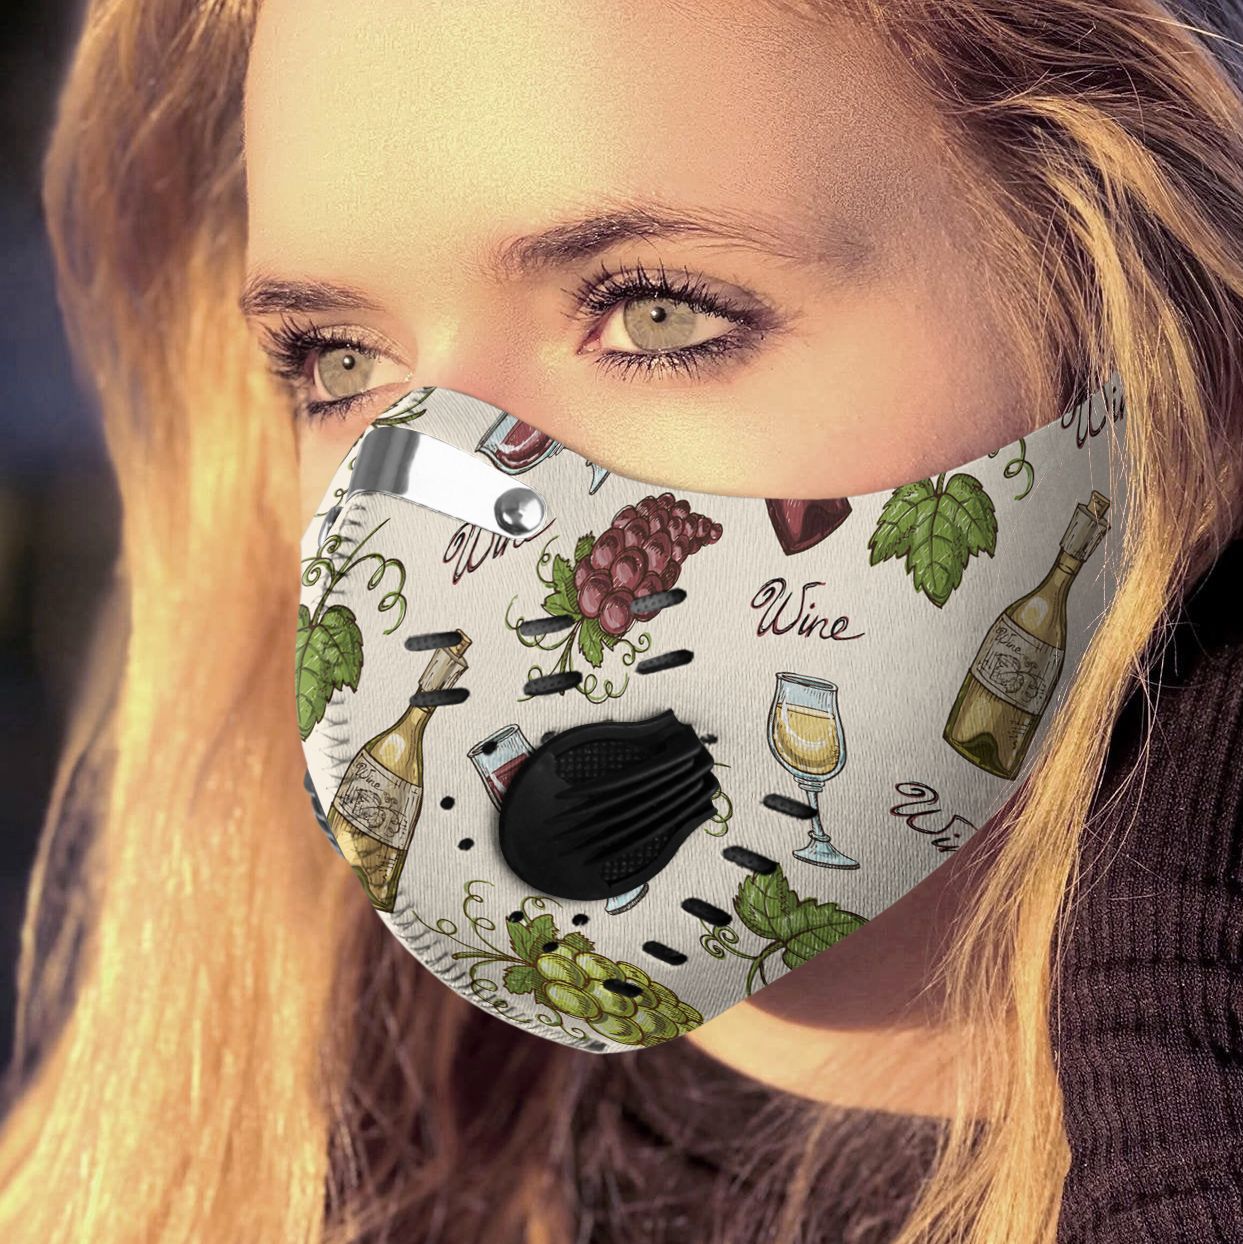 Love wine carbon pm 2.5 face mask